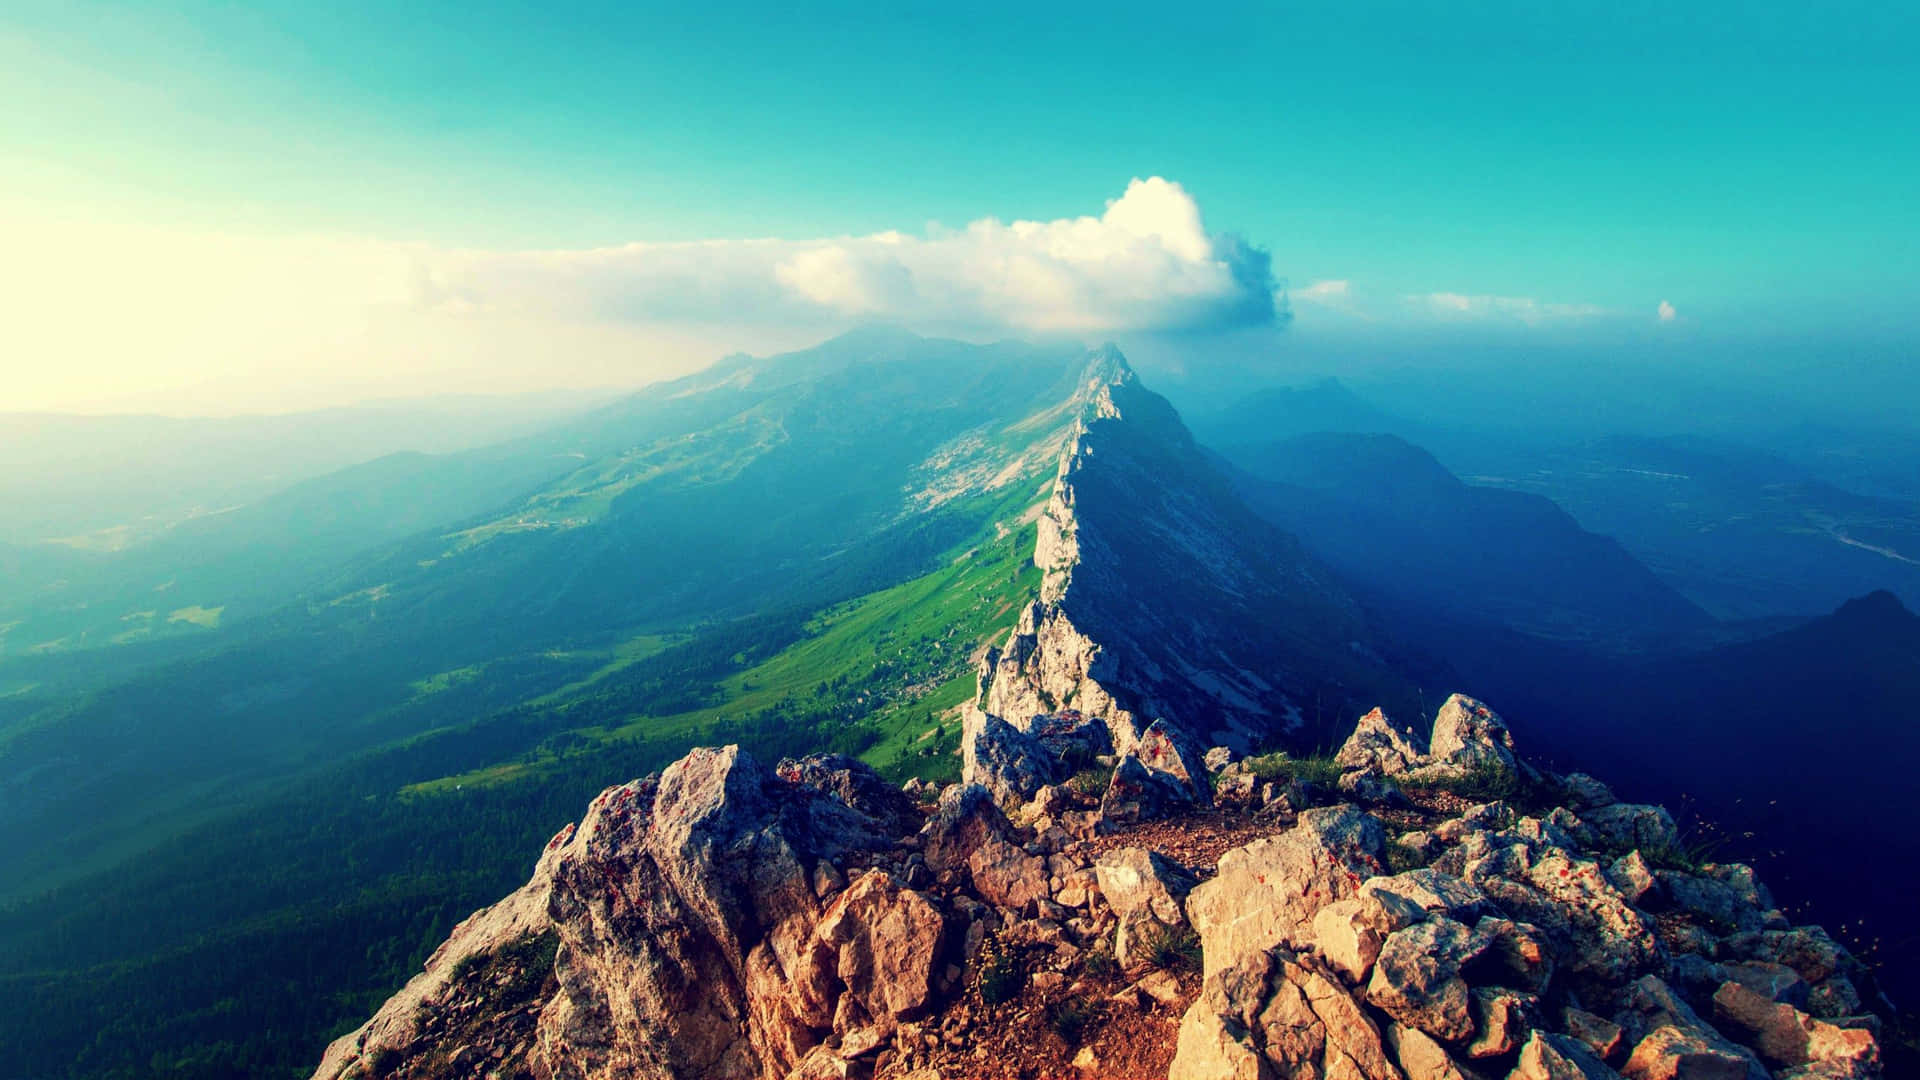 1440p Travel Mountain Peak Background